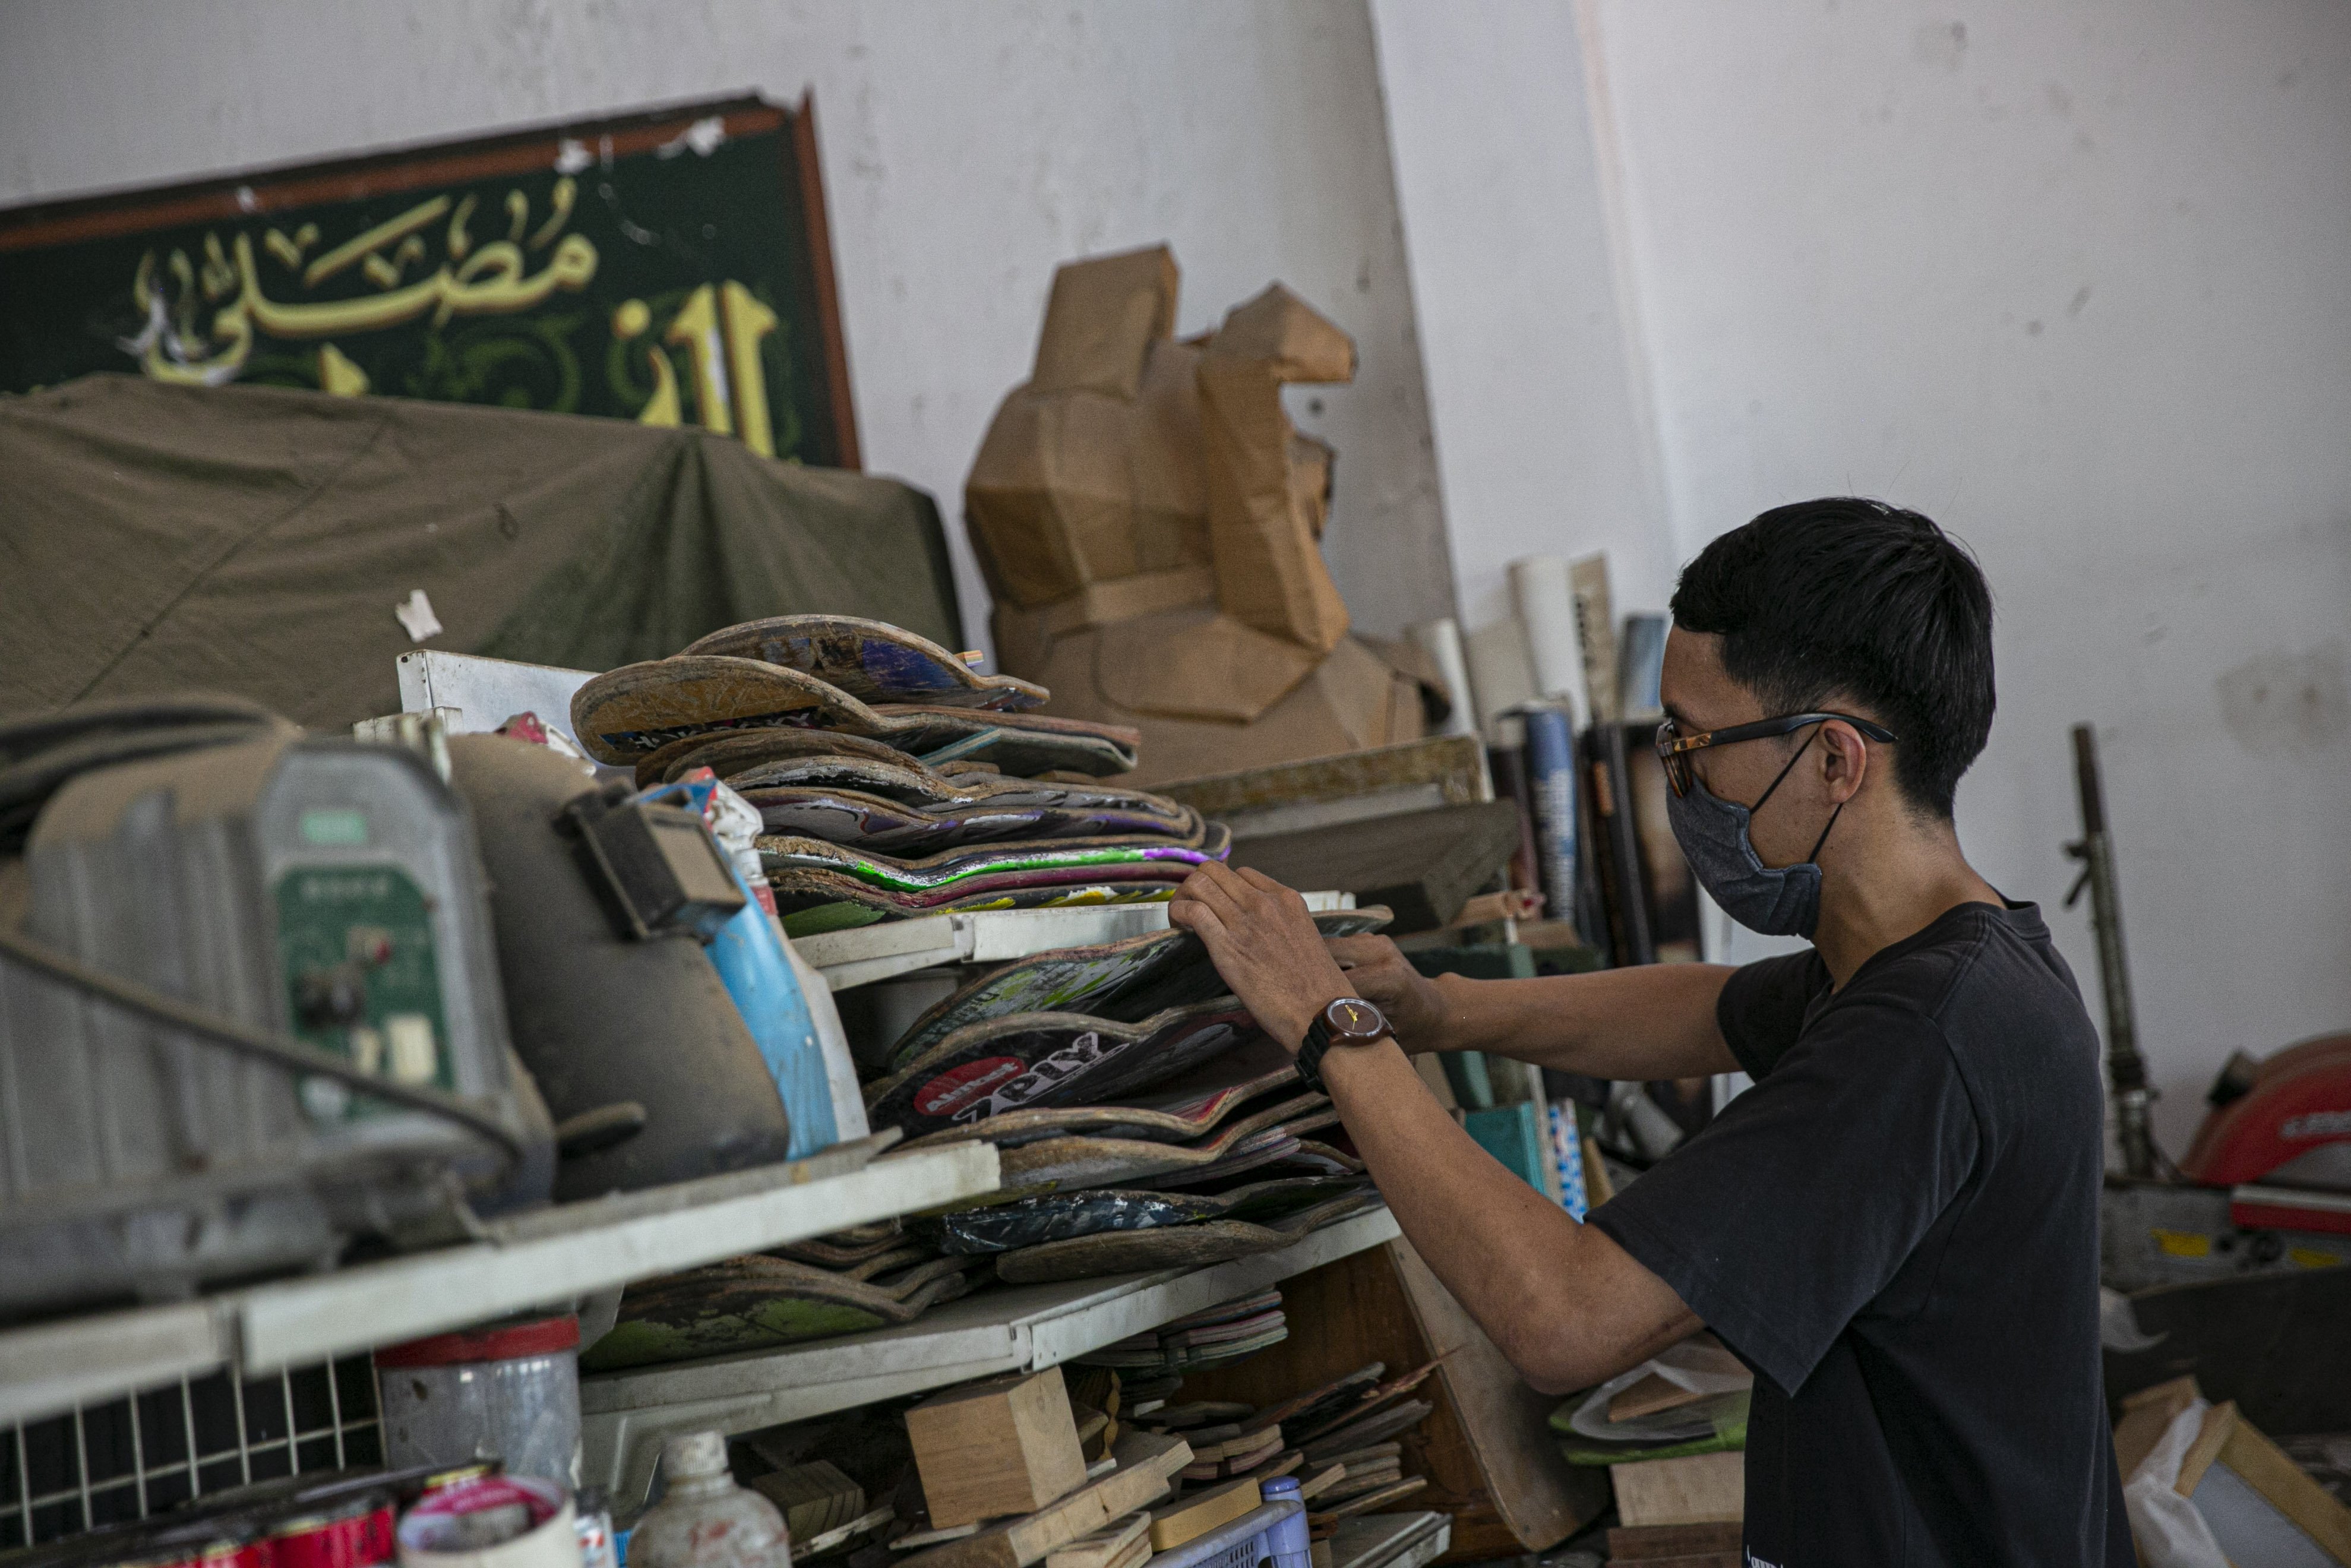 Pendiri brand kacamata Kabau, Reynanto Akhmad Aditya (35) memilih bahan skateboard Untuk pesanan kacamata kayu di workshopnya di kawasan Kramat Jati, Jakarta Timur, Kamis (1/10/2020). Dibuat dari limbah papan skate, produk kacamata tersebut dibandrol dengan harga mulai dari Rp. 1.200.000 hingga Rp. 1.500.000. Tidak hanya menyasar pasar lokal produk kacamata kabau juga sudah merambah ke pasar mancanegara seperti Australia, Amerika, Swiss, dan Jepang.